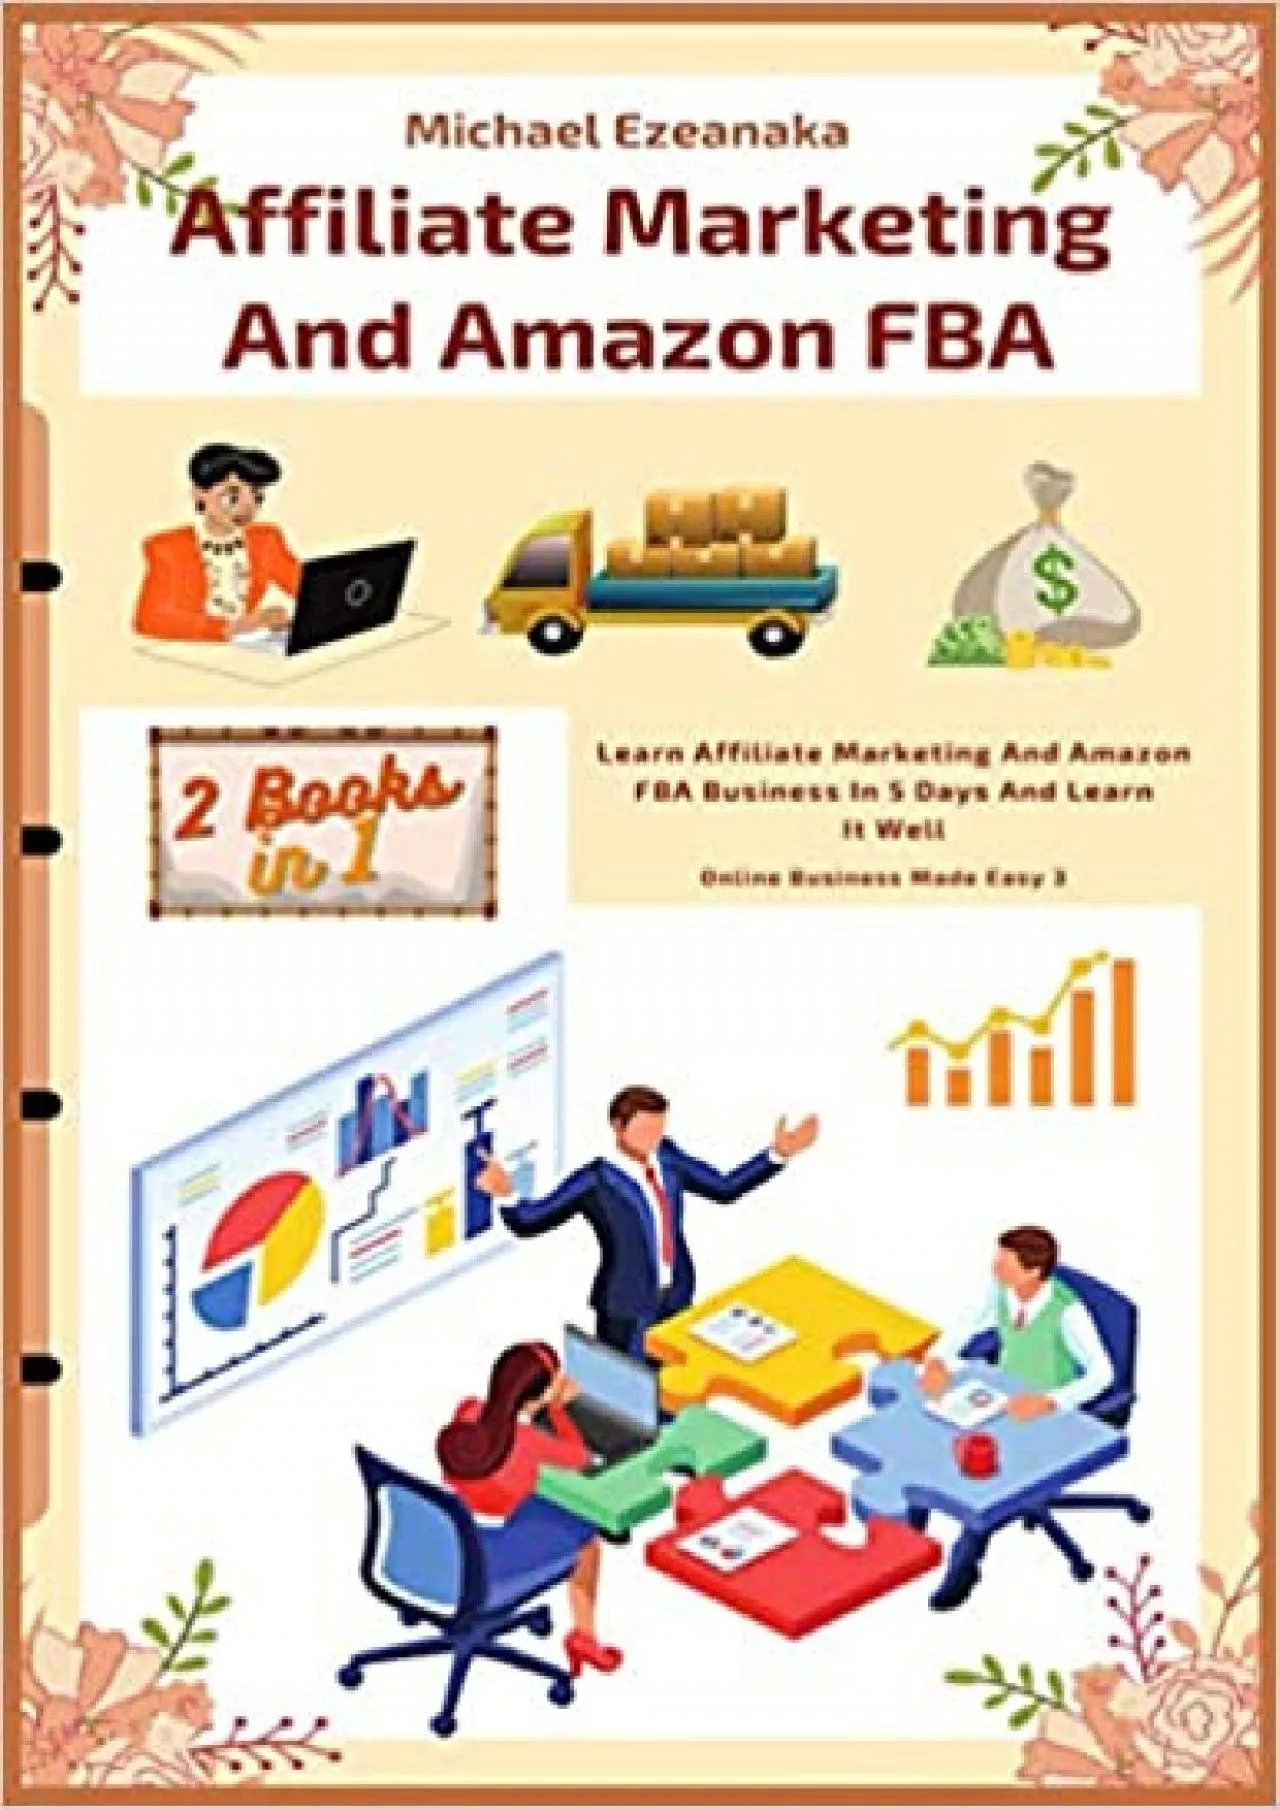 Affiliate Marketing And Amazon FBA 2 Books In 1 Learn Affiliate Marketing And Amazon FBA